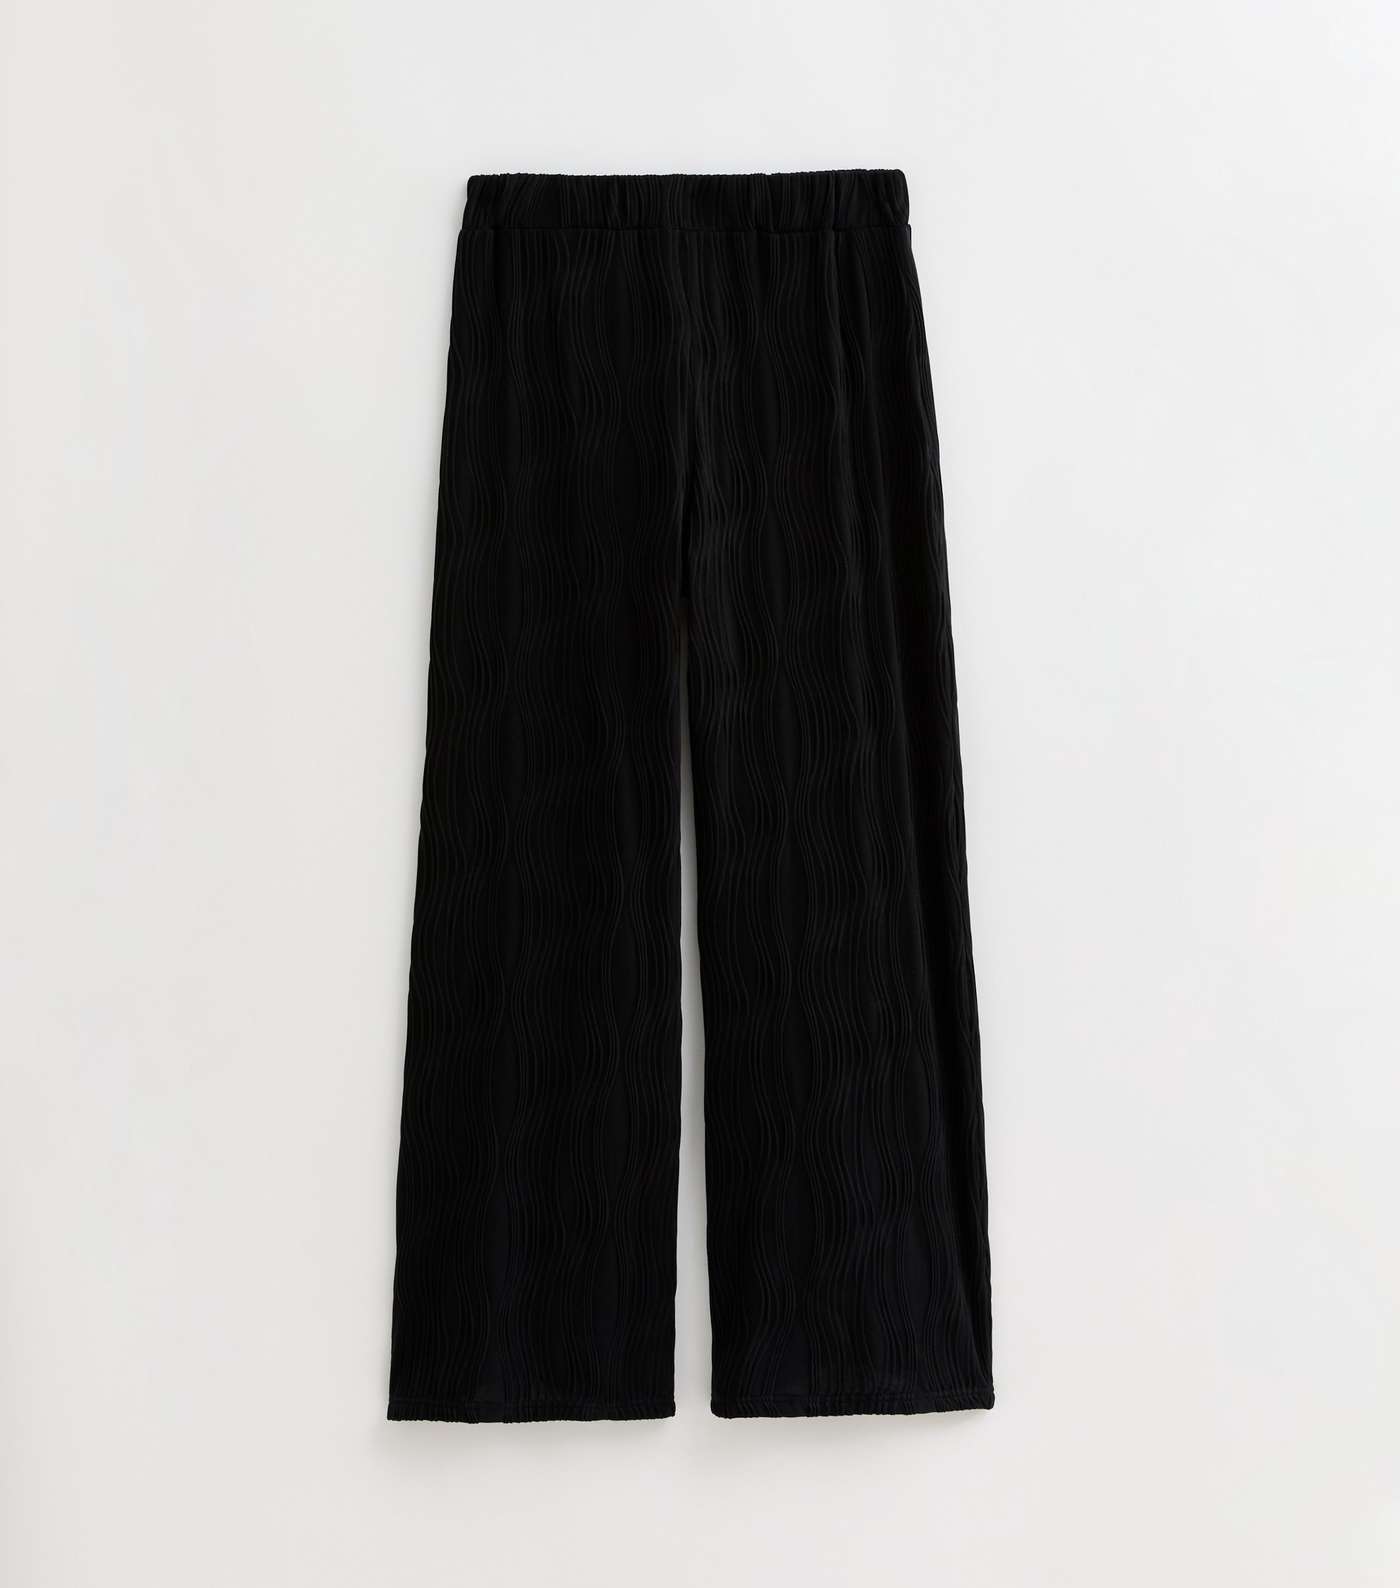 Petite Black Ripple High Waist Wide Leg Trousers Image 5